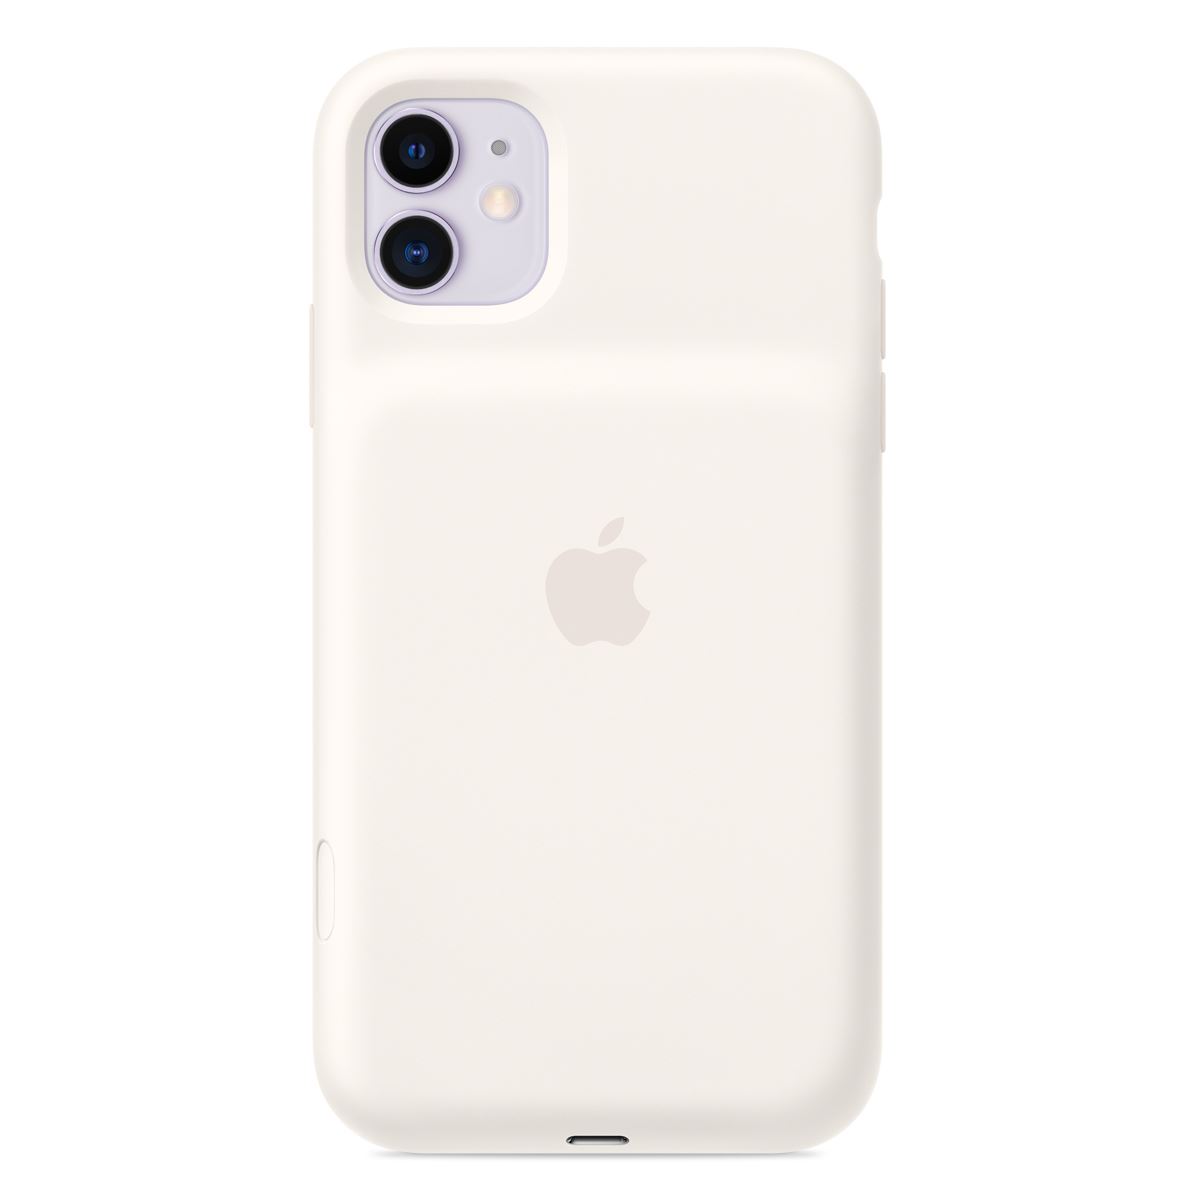 iPhone 11/11 Pro/11 Pro Max用の「Smart Battery Case」が登場 ...